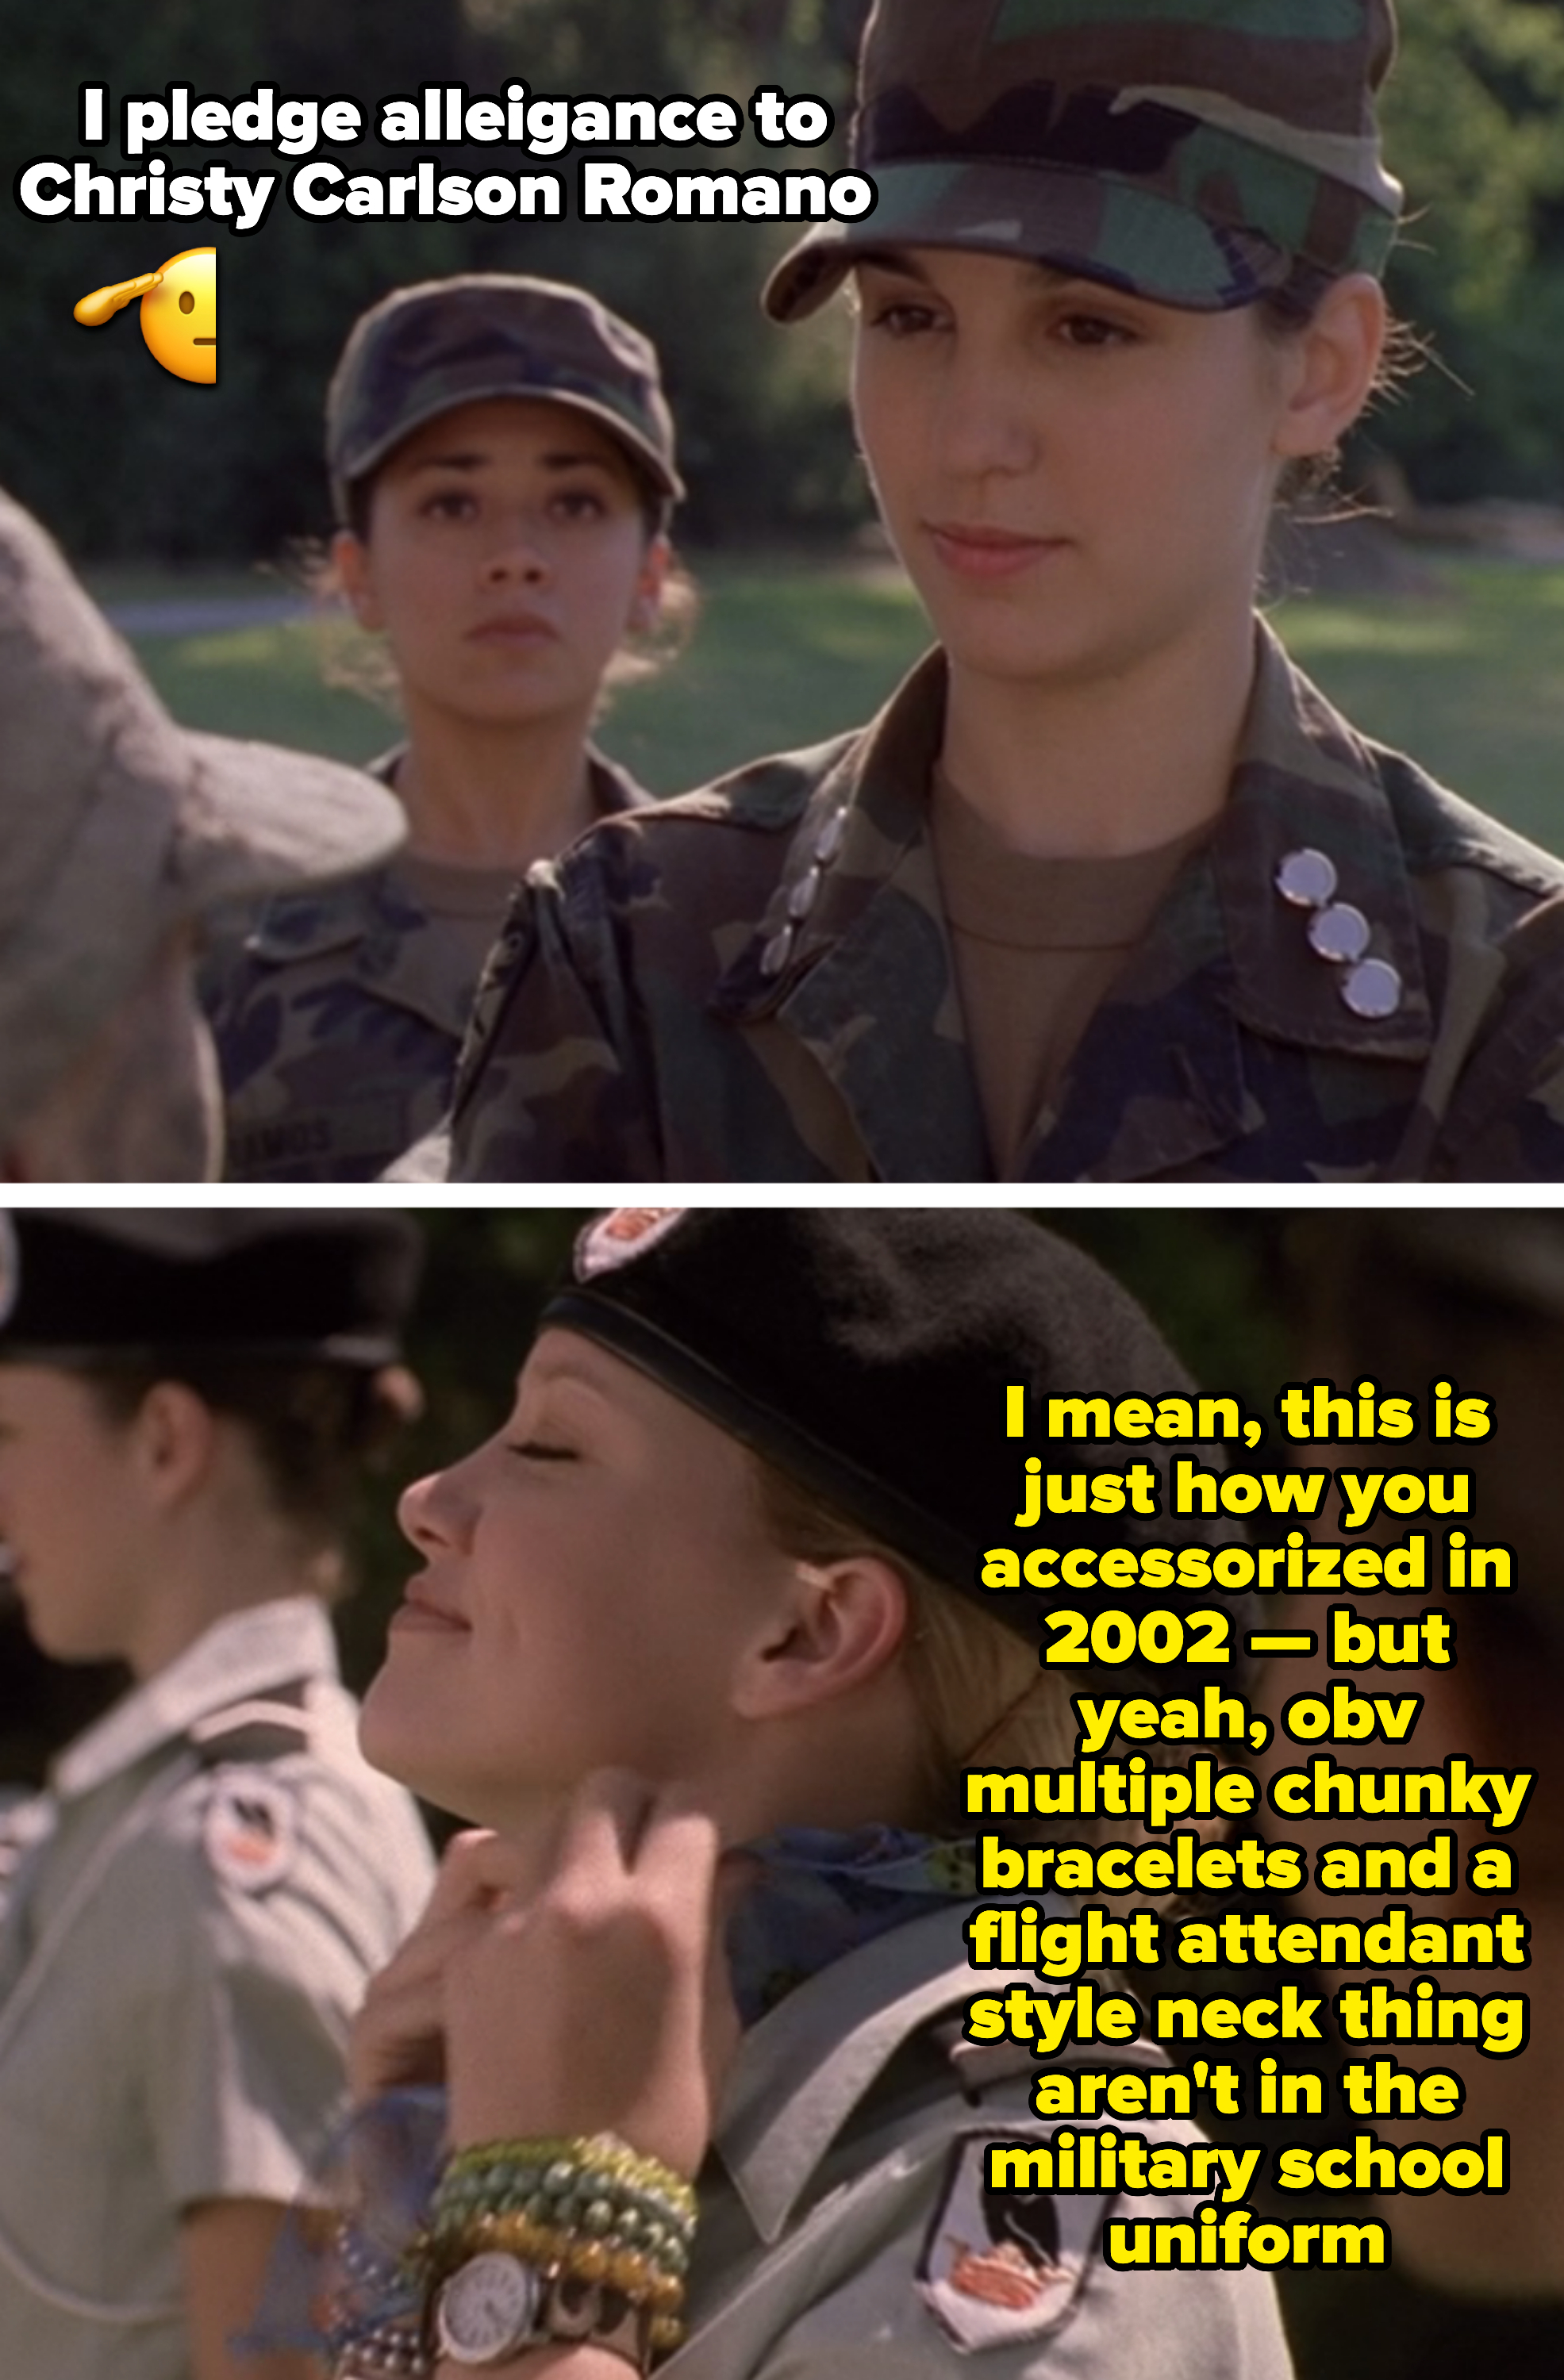 cadet kelly accessorizing her uniform